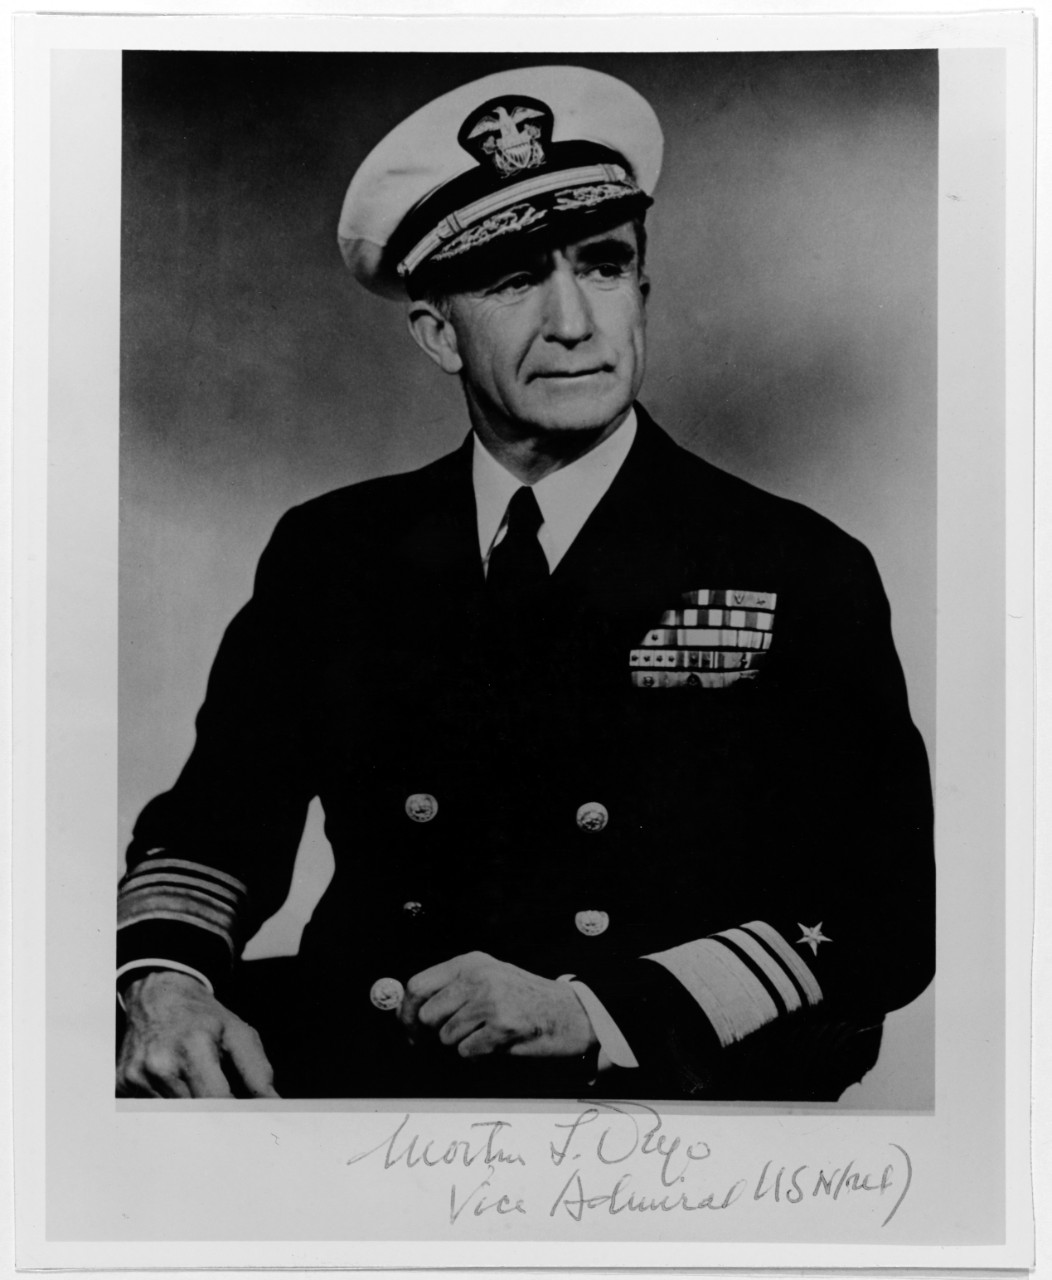 Vice Admiral Morton L. Deyo, USN